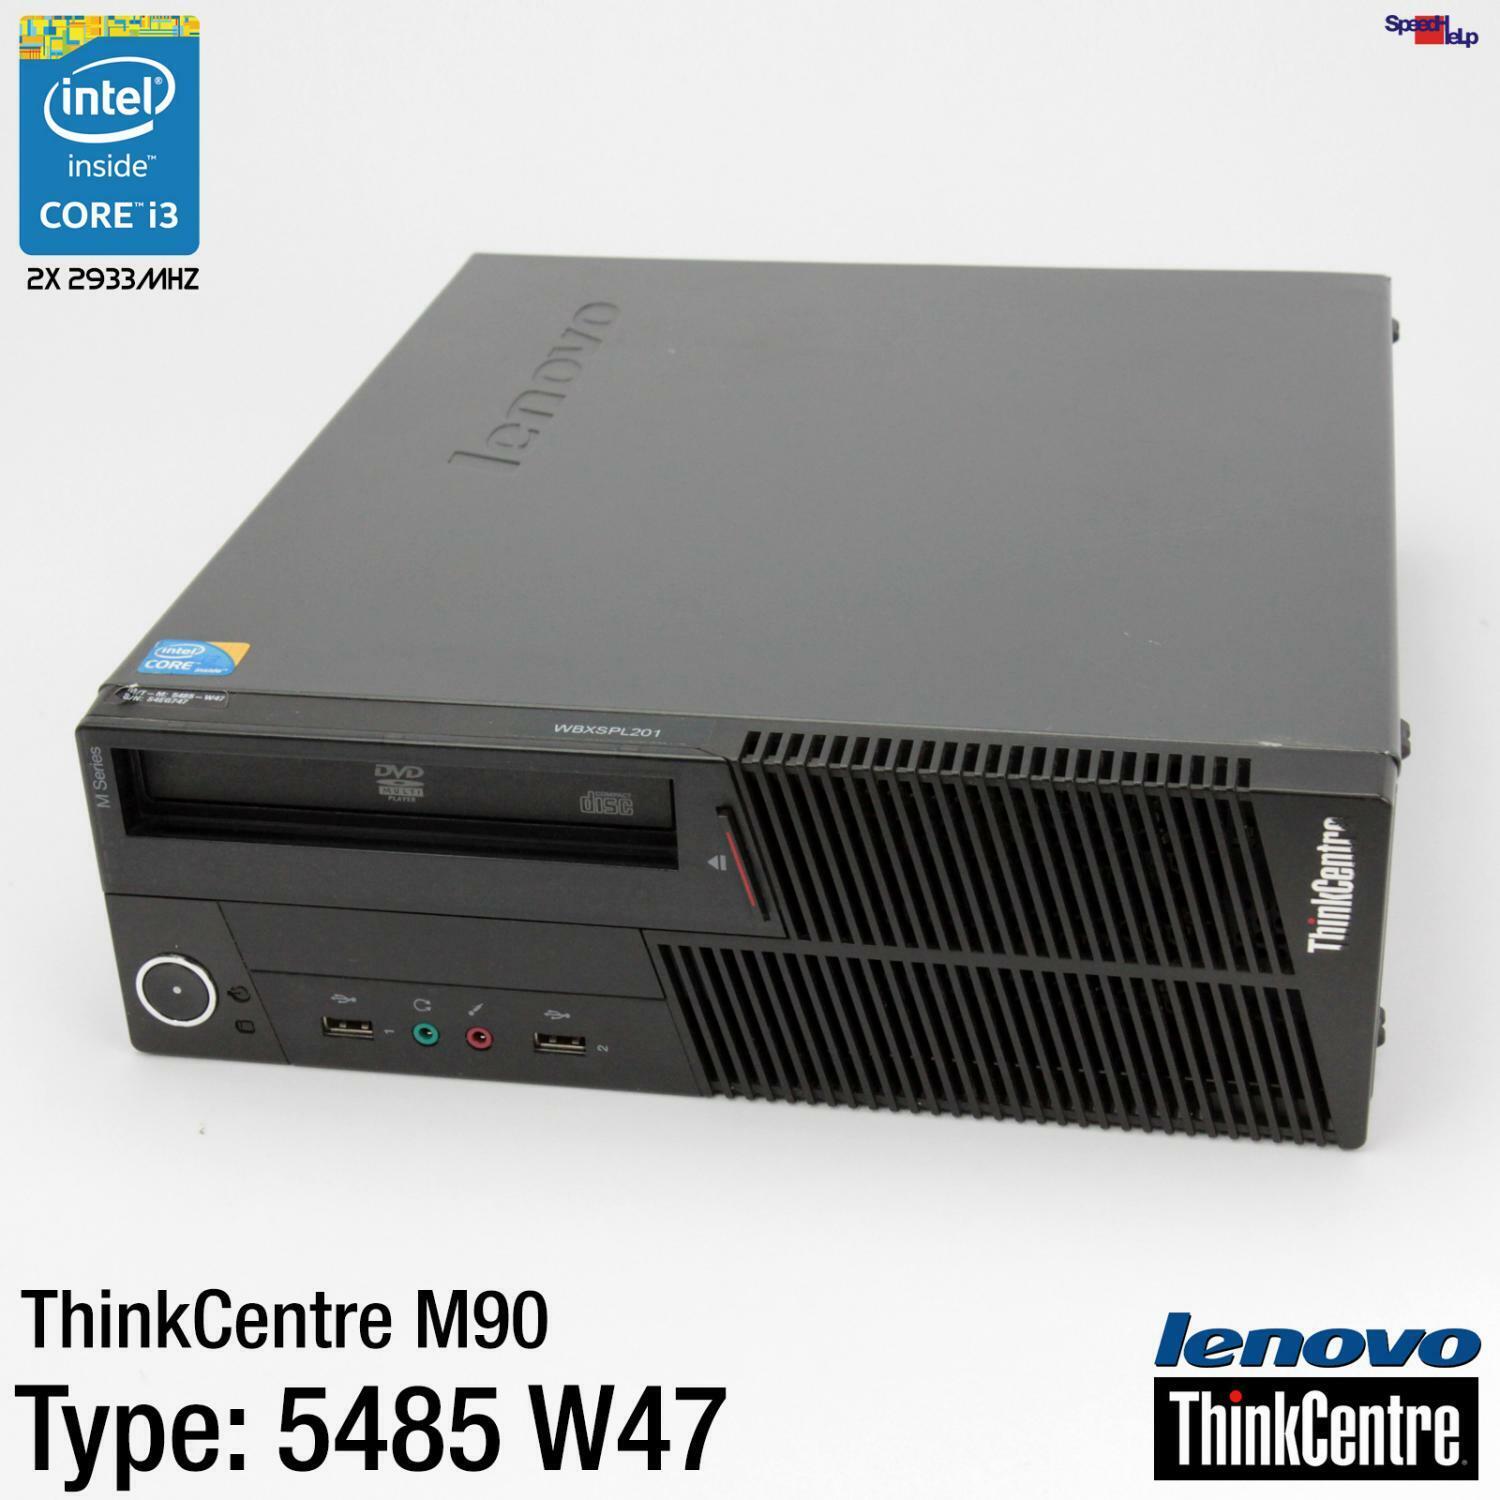 IBM Lenovo ThinkCentre M90 Type: 5485 W47 Computer PC RS232 Windows XP 128GB SSD